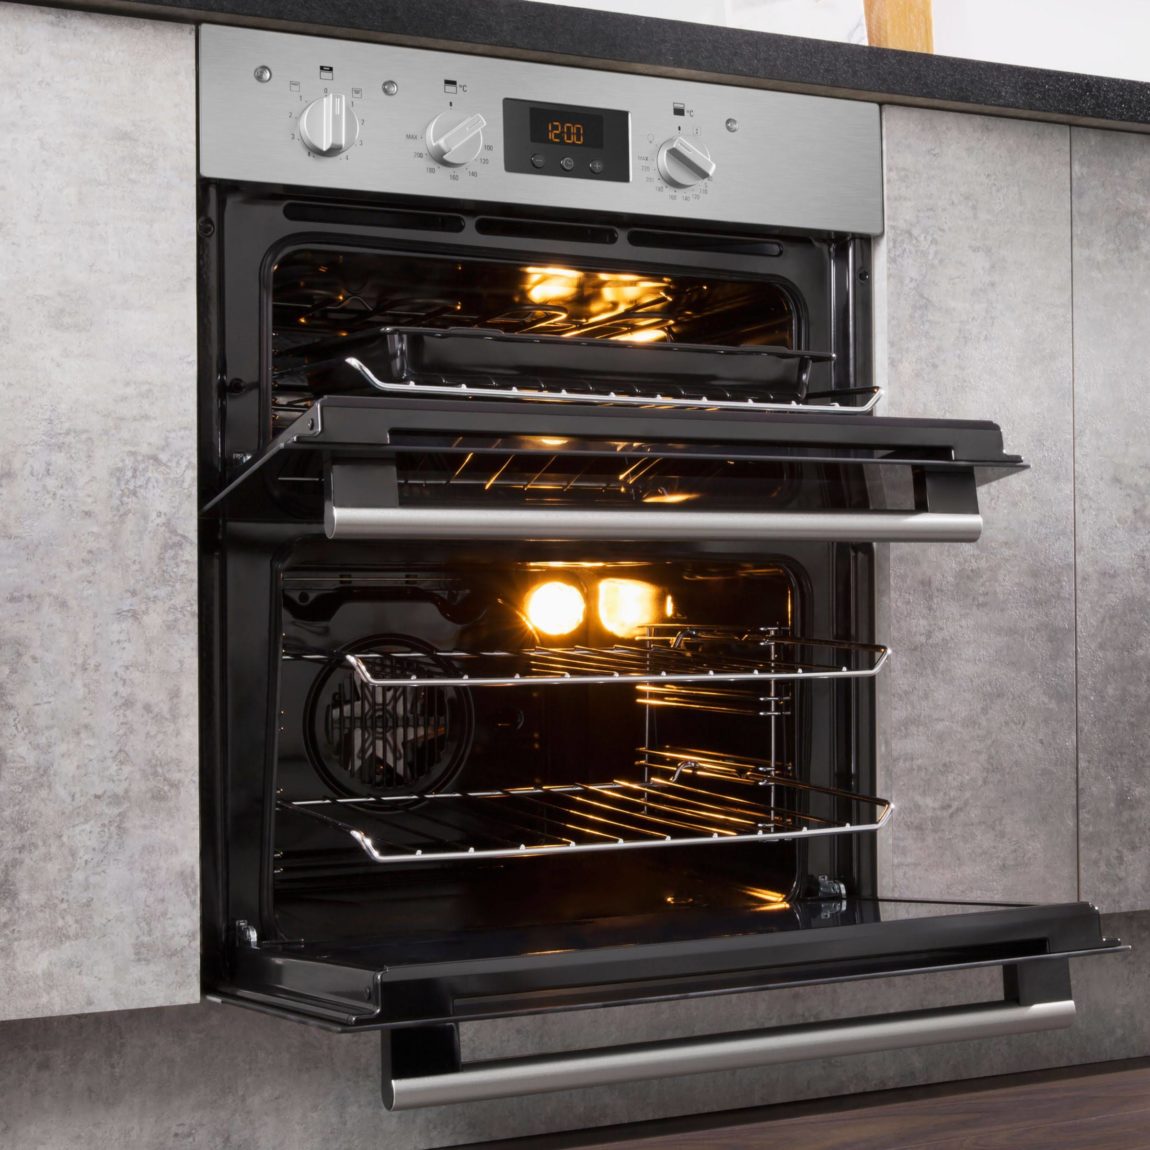 HOTPOINT DU2540IX Built-under double oven - Toplex Home Appliances in ...